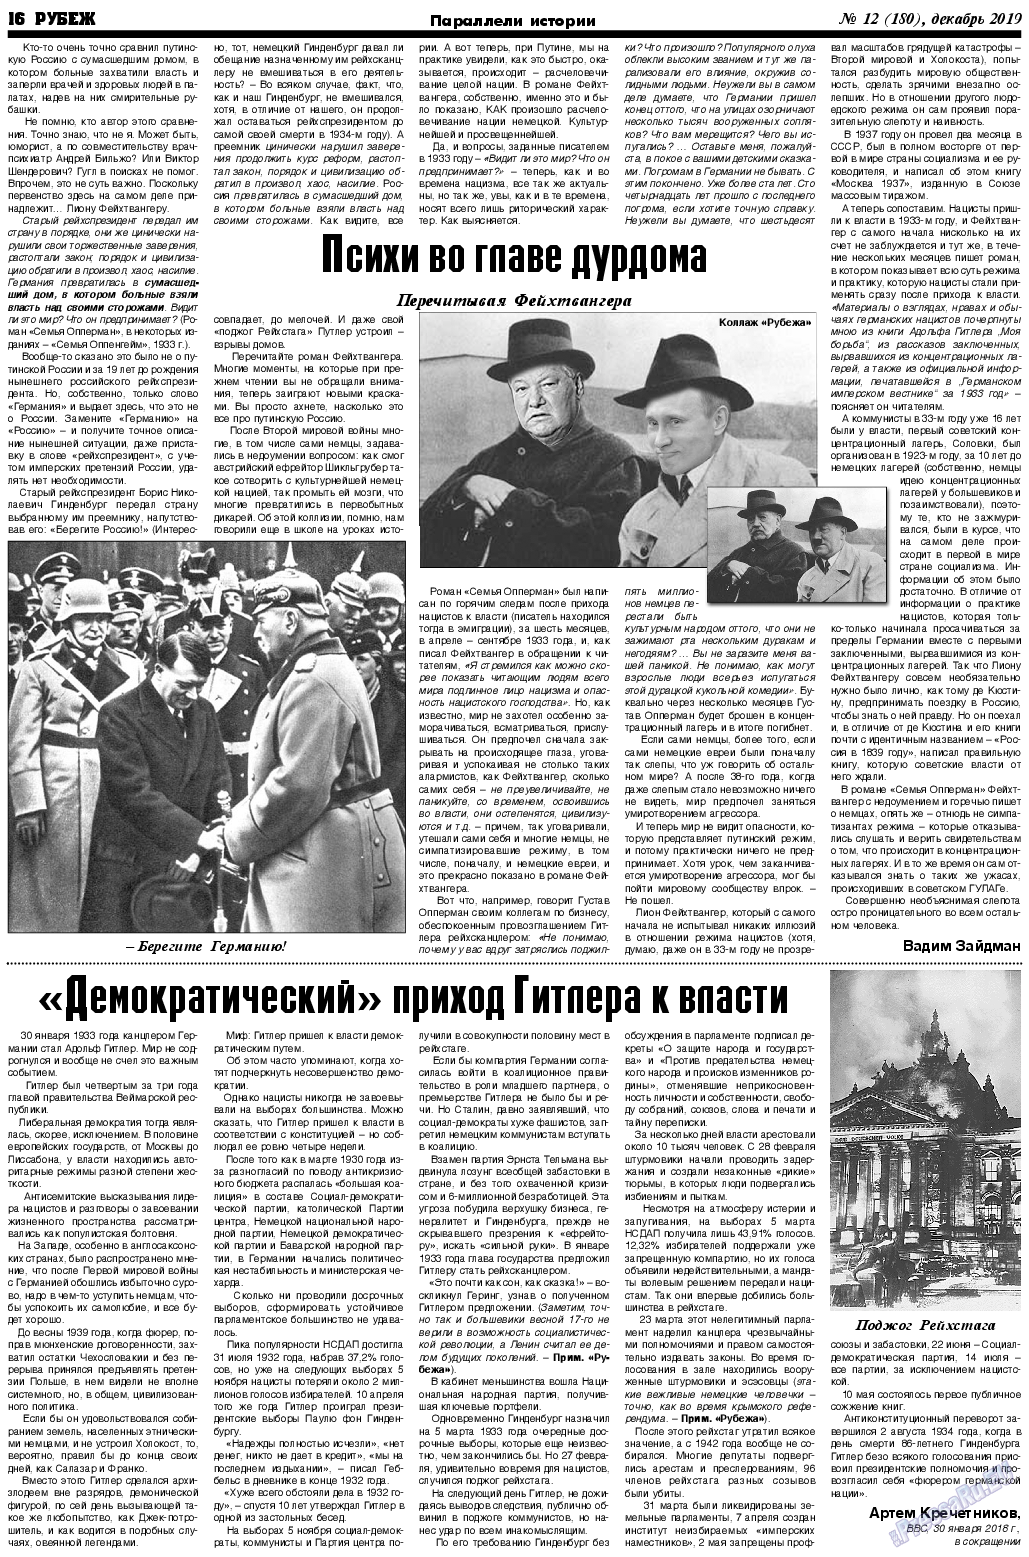 Рубеж, газета. 2019 №12 стр.16